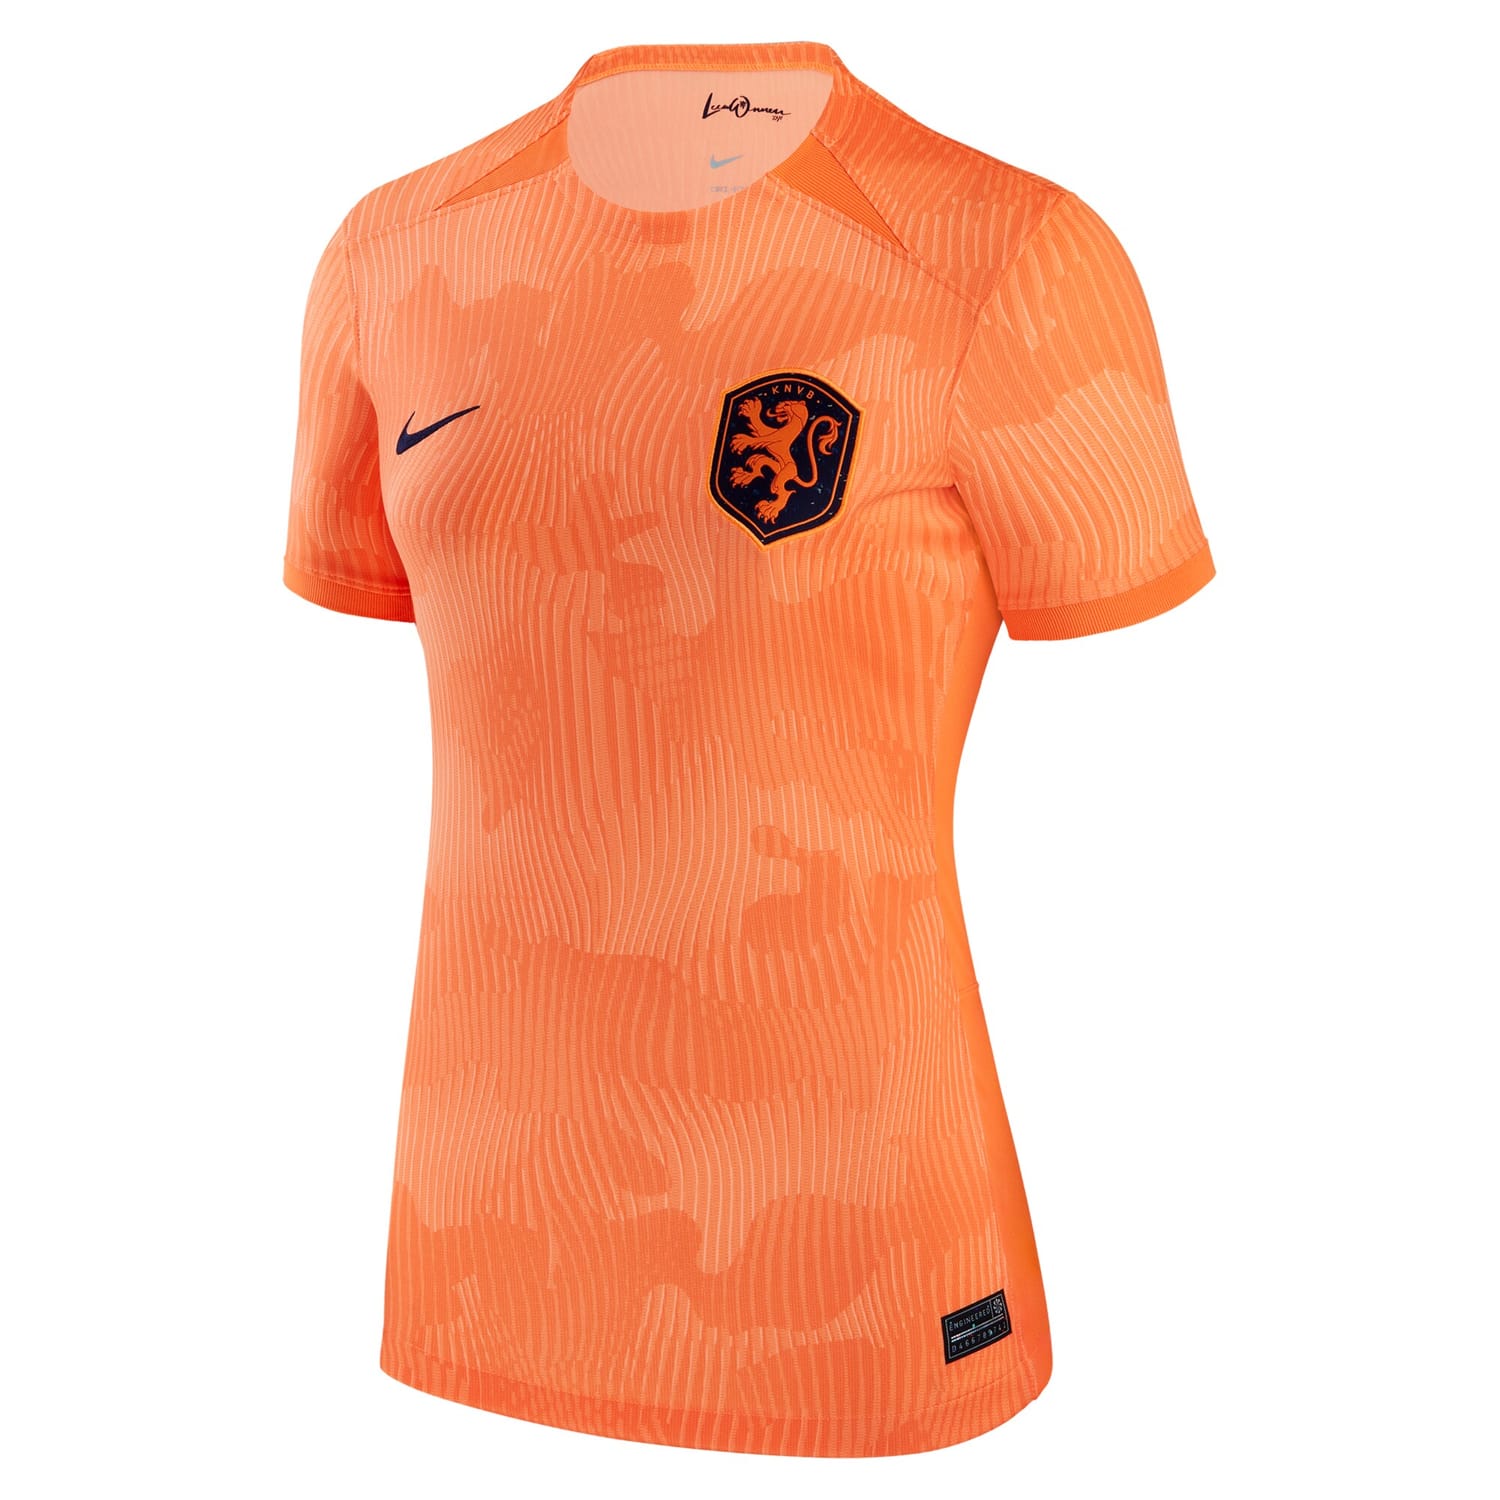 Netherlands Women's National Team Home Jersey Shirt Orange 2023 for Women